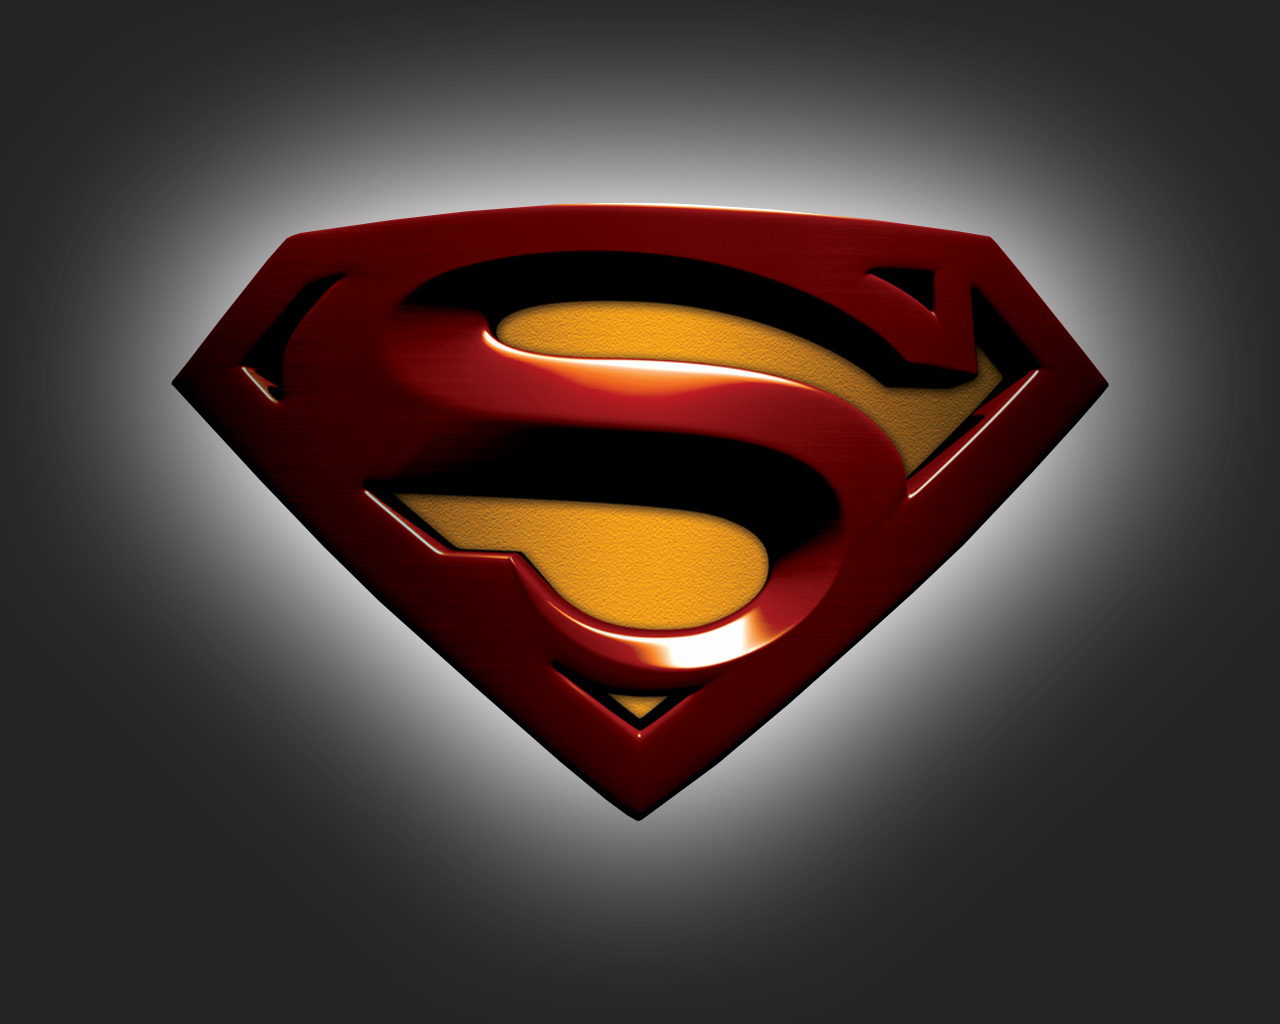 https://blogger.googleusercontent.com/img/b/R29vZ2xl/AVvXsEidKolFSFSq-eUEmmUqpiLRQFl_U5ySDrg5jiAMSjjkyCky8yLTObflFyPX2ObbaE8kRpUgWFaOWoCk7Ev9PrJZZ6rWBA1DxgdRN9djne5bUSydKT7H4vbqaOIEW6UldOk8Y6LYtNdaSQ/s1600/superman_3d_logo1.jpg